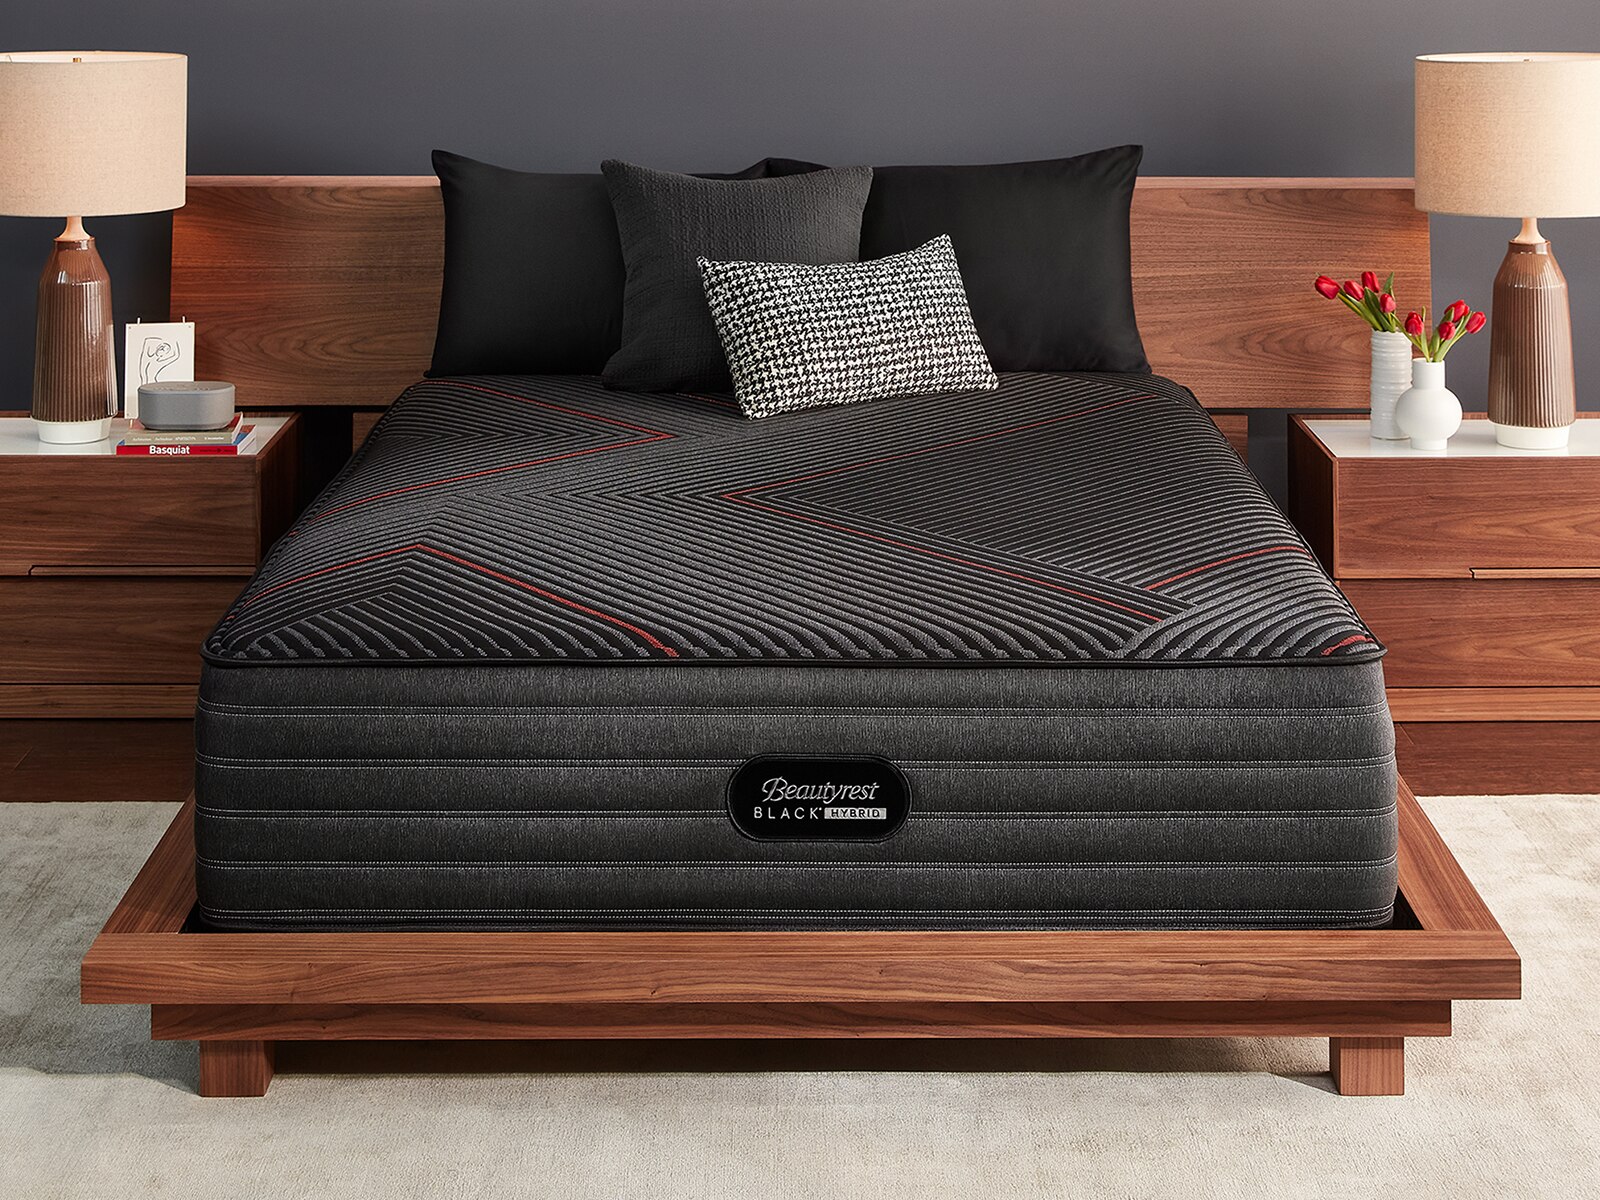 beautyrest black hybrid alcove plush mattress set